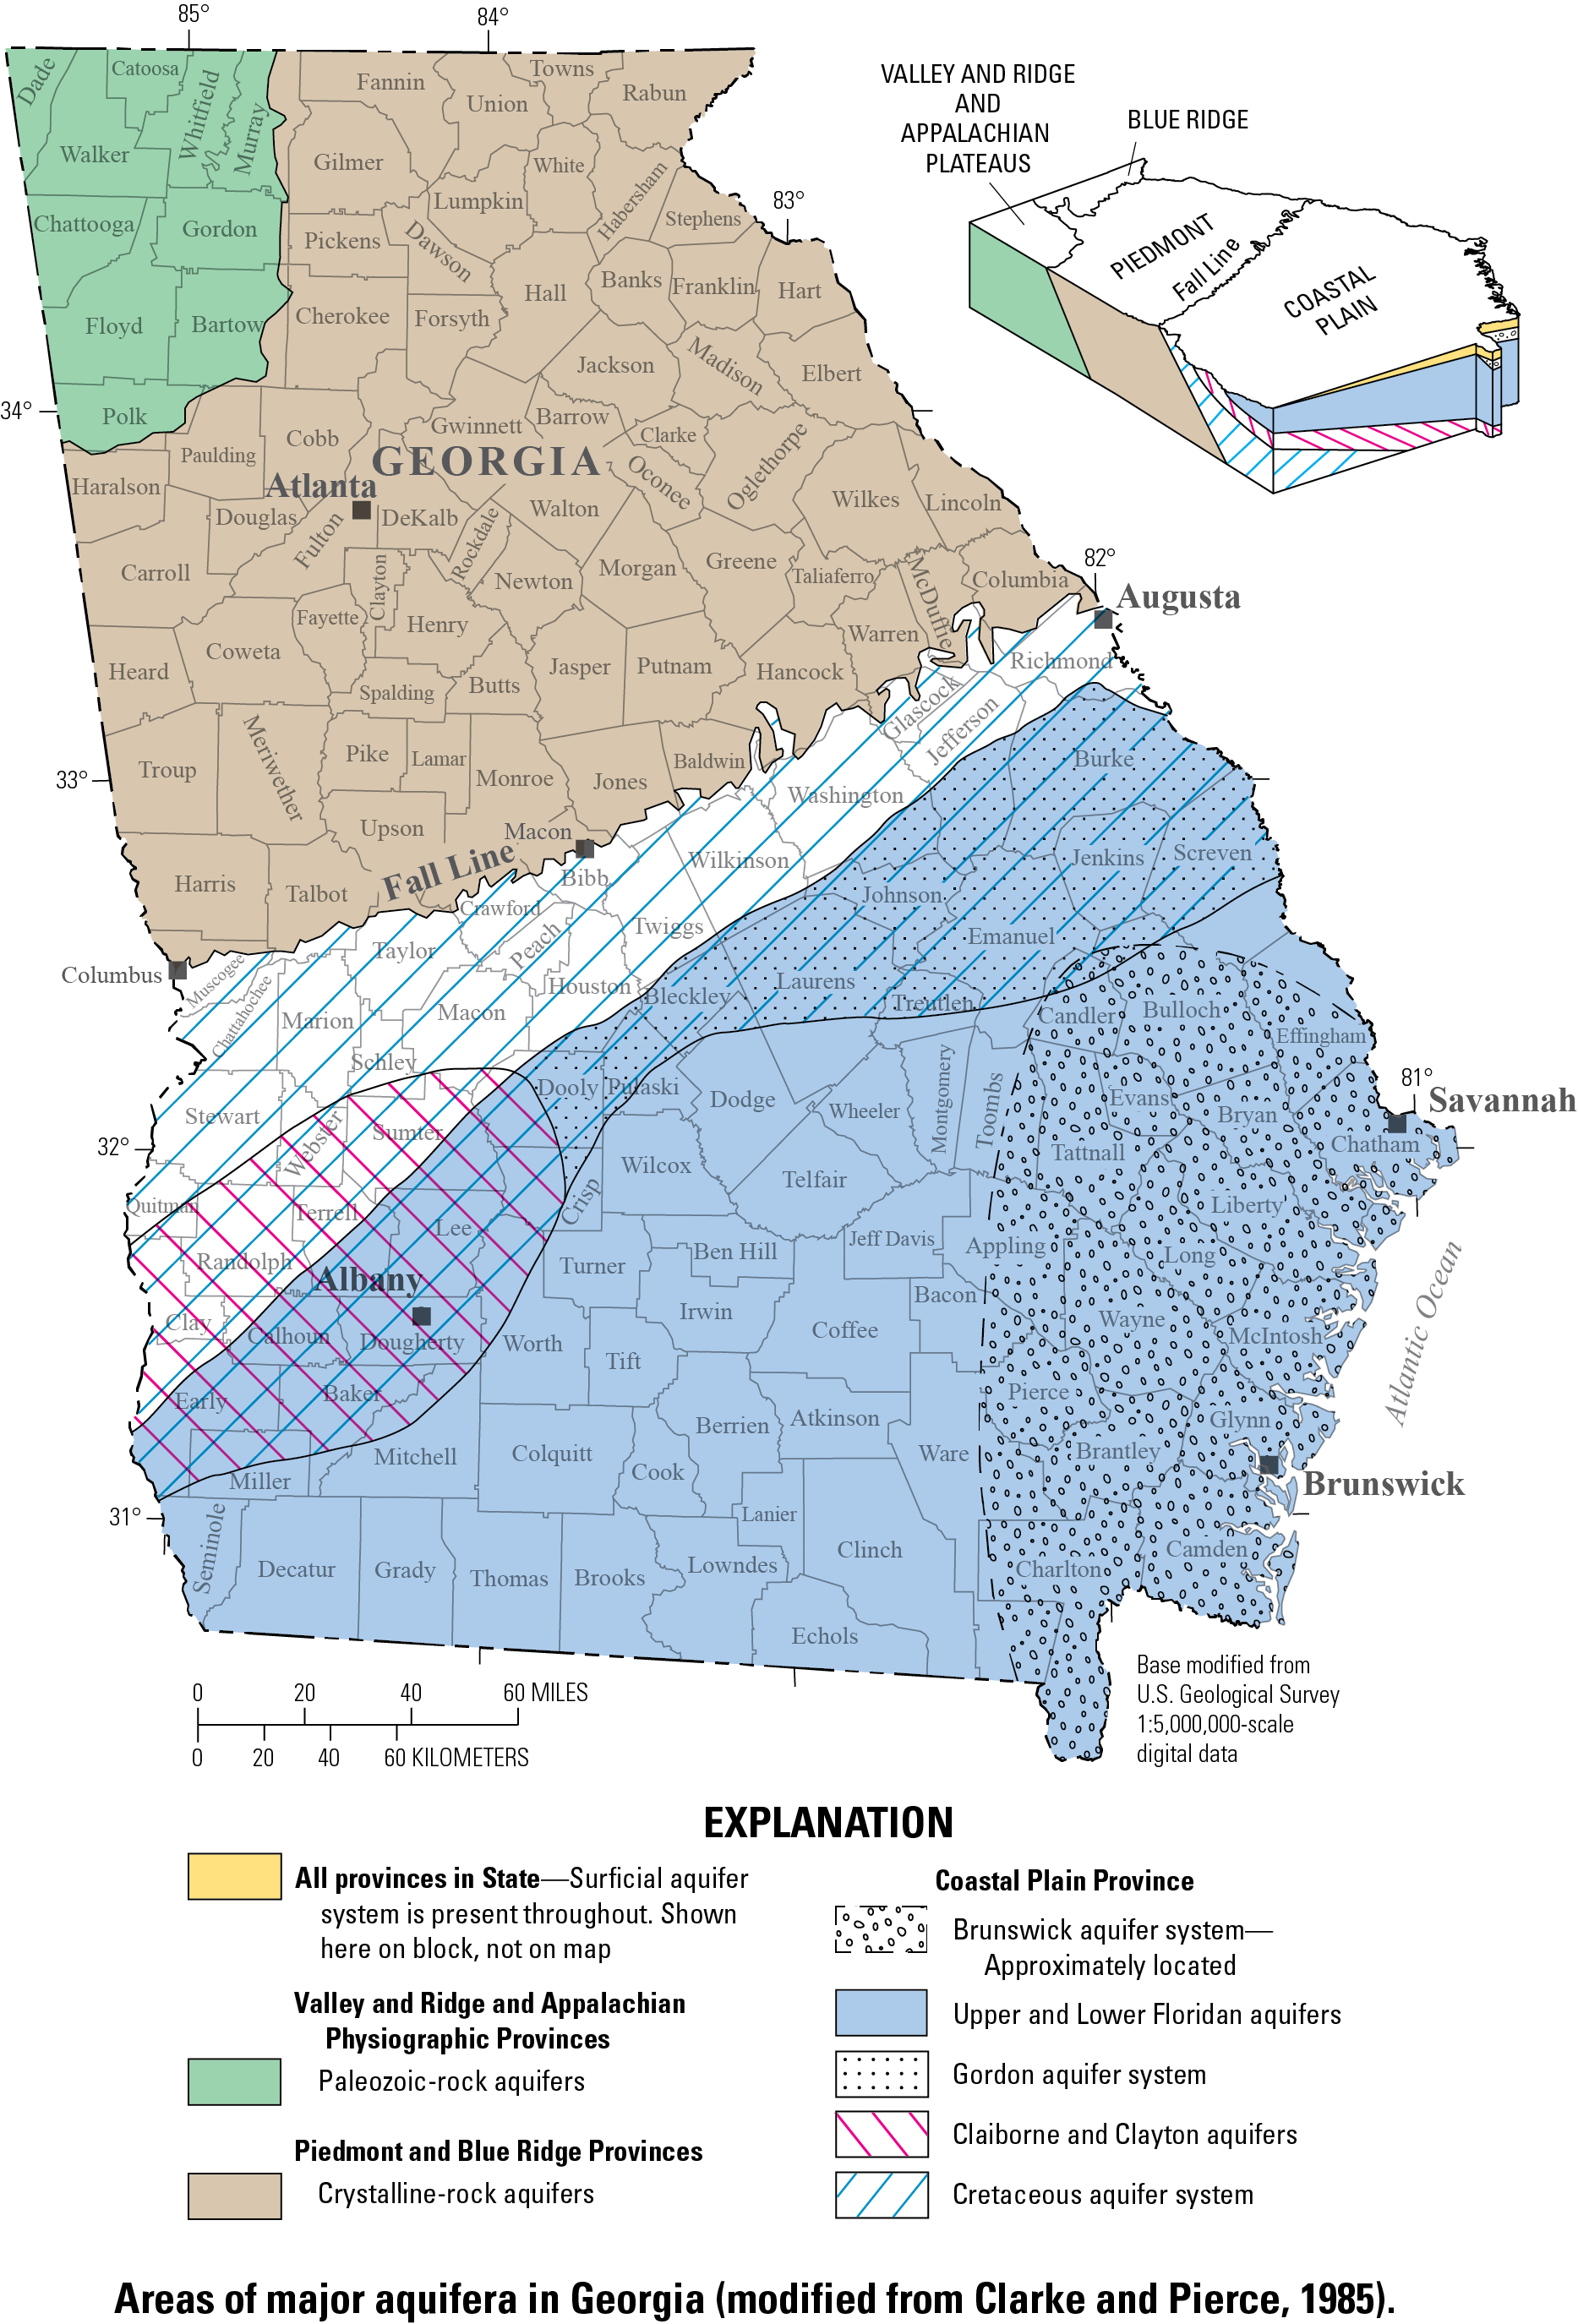 Map of Major Georgia Aquifiers